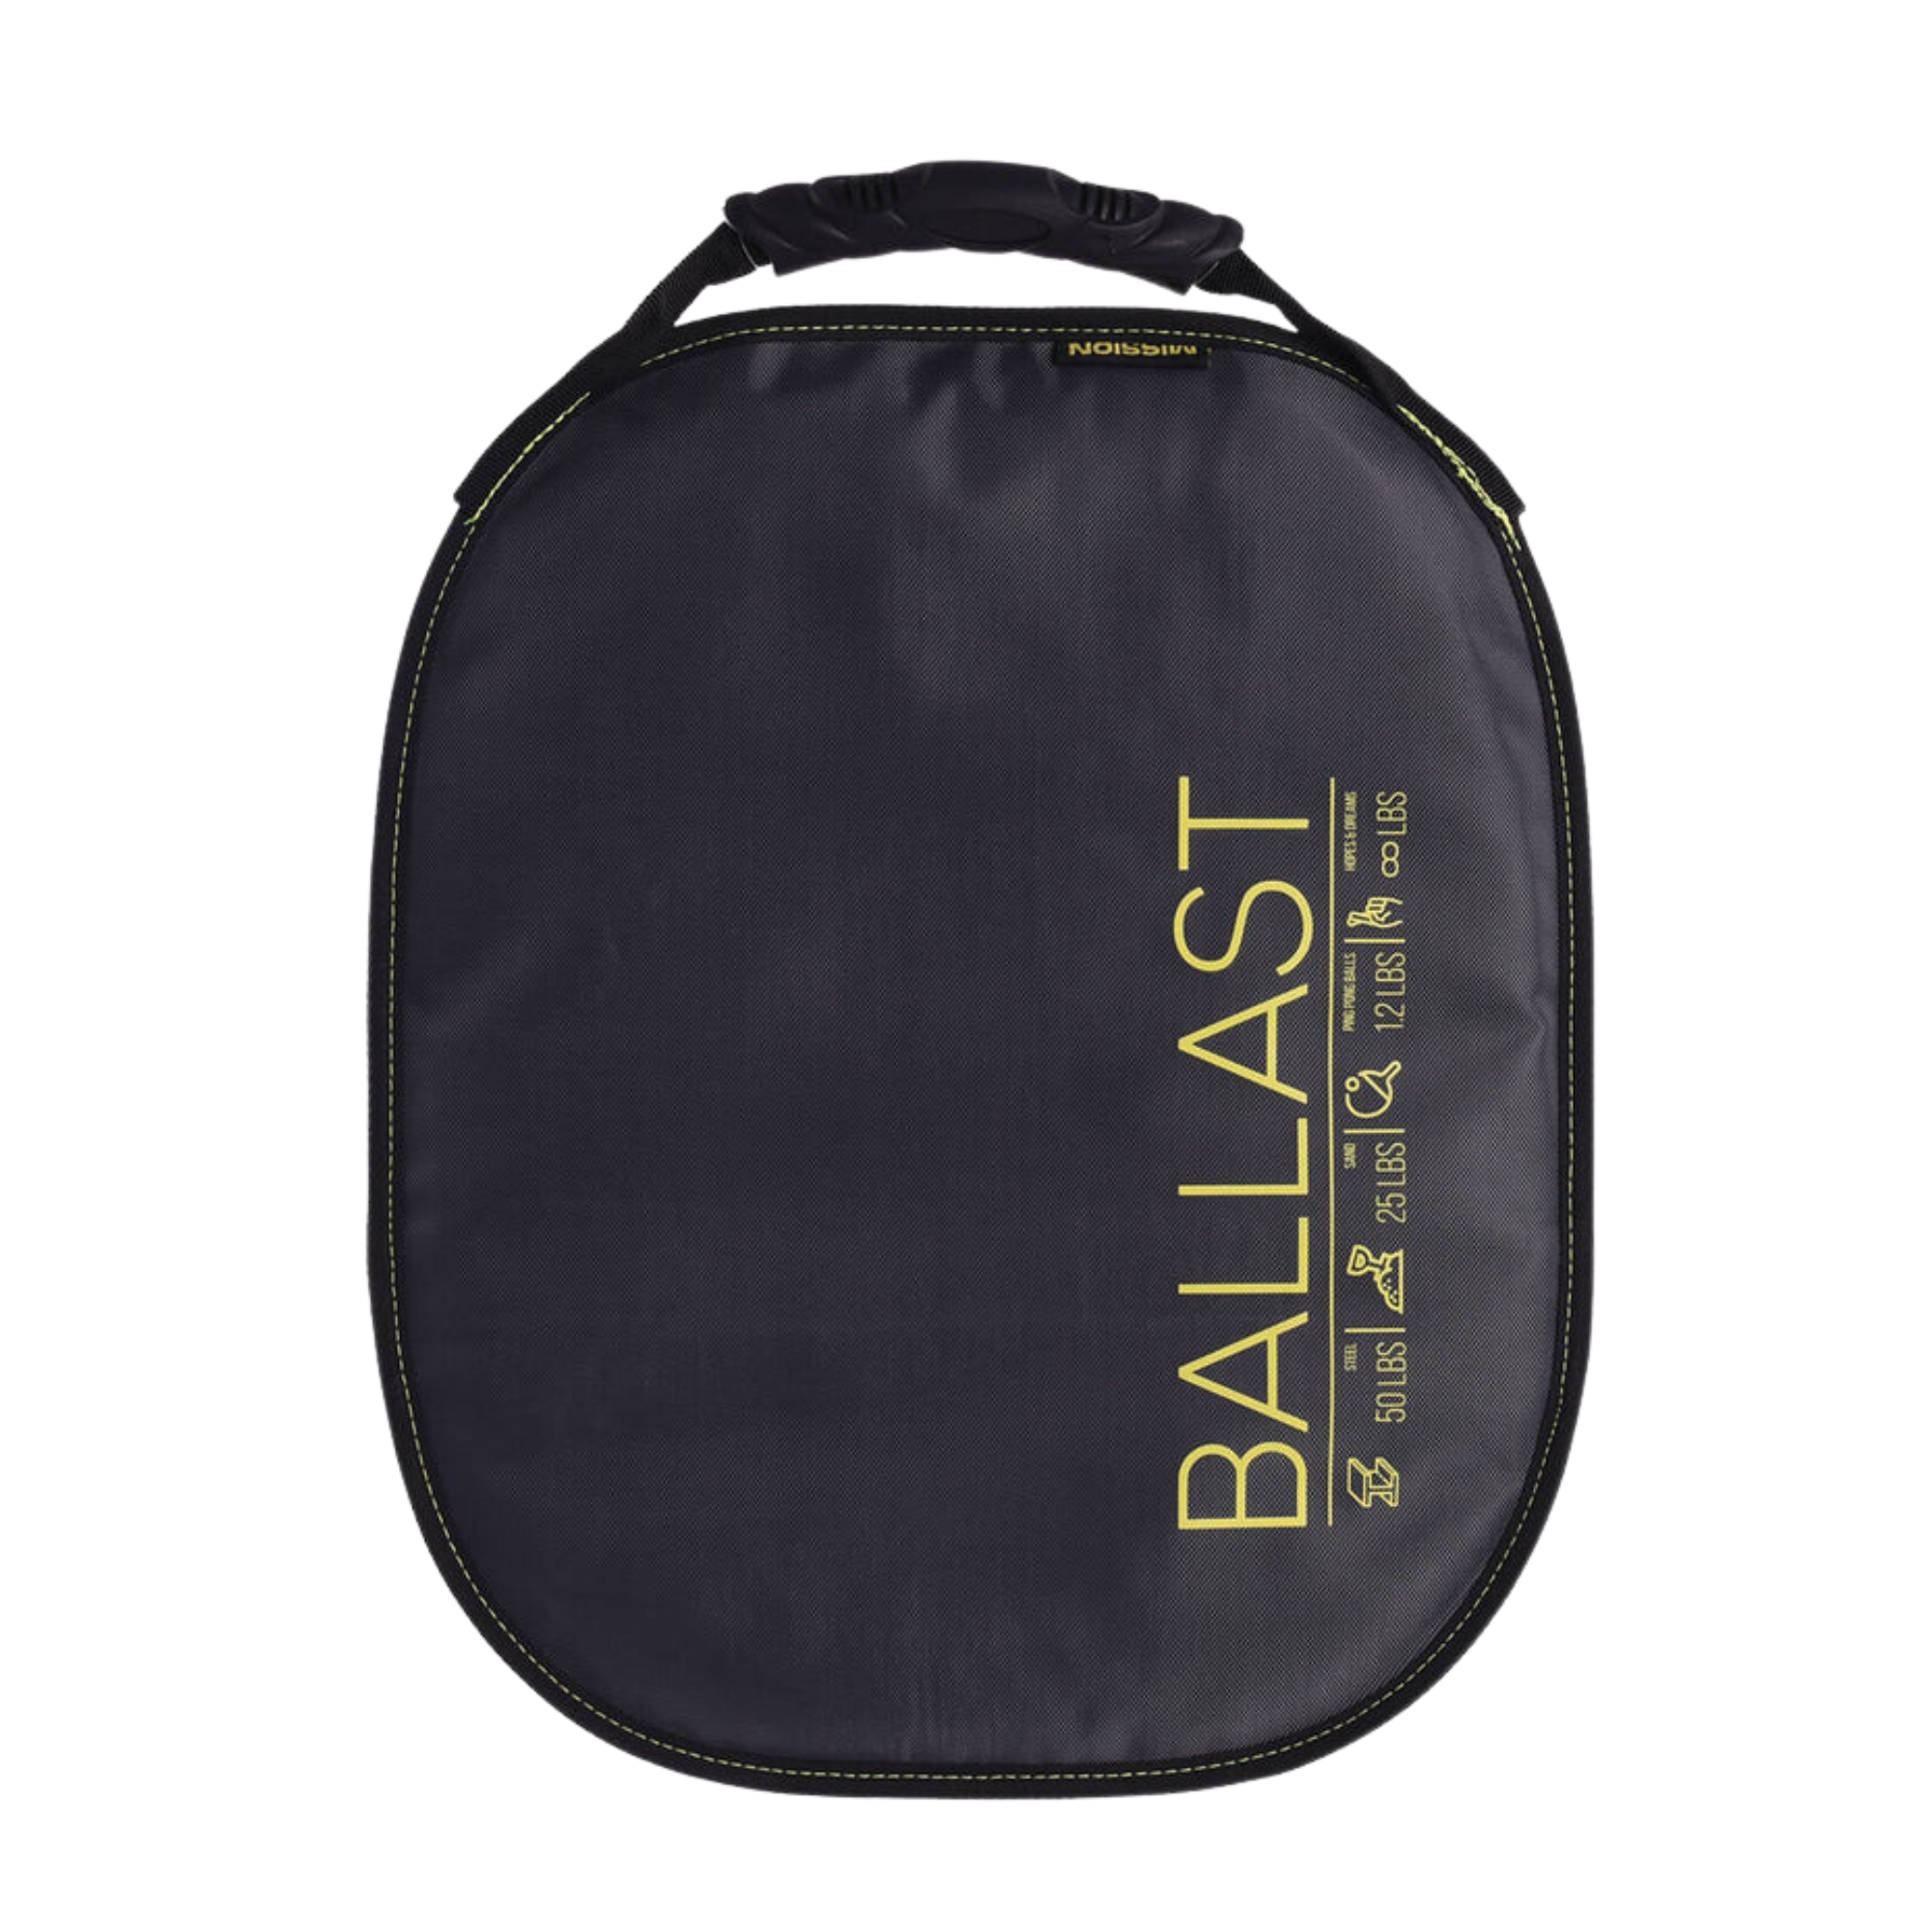 Mission Ballast Bag - Unfilled